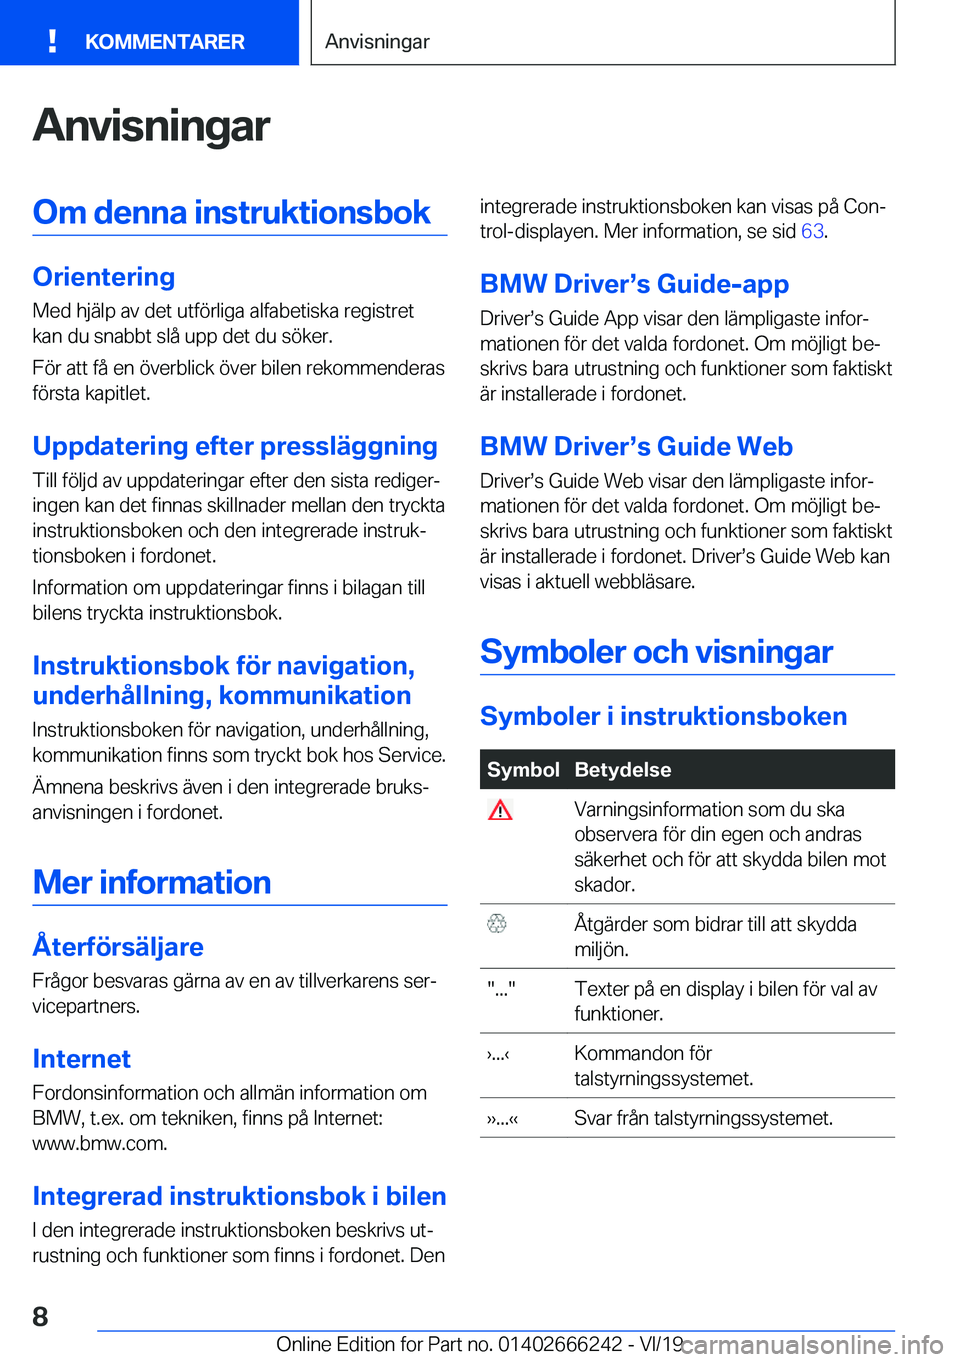 BMW 2 SERIES COUPE 2020  InstruktionsbÖcker (in Swedish) �A�n�v�i�s�n�i�n�g�a�r�O�m��d�e�n�n�a��i�n�s�t�r�u�k�t�i�o�n�s�b�o�k
�O�r�i�e�n�t�e�r�i�n�g
�M�e�d��h�j�ä�l�p��a�v��d�e�t��u�t�f�